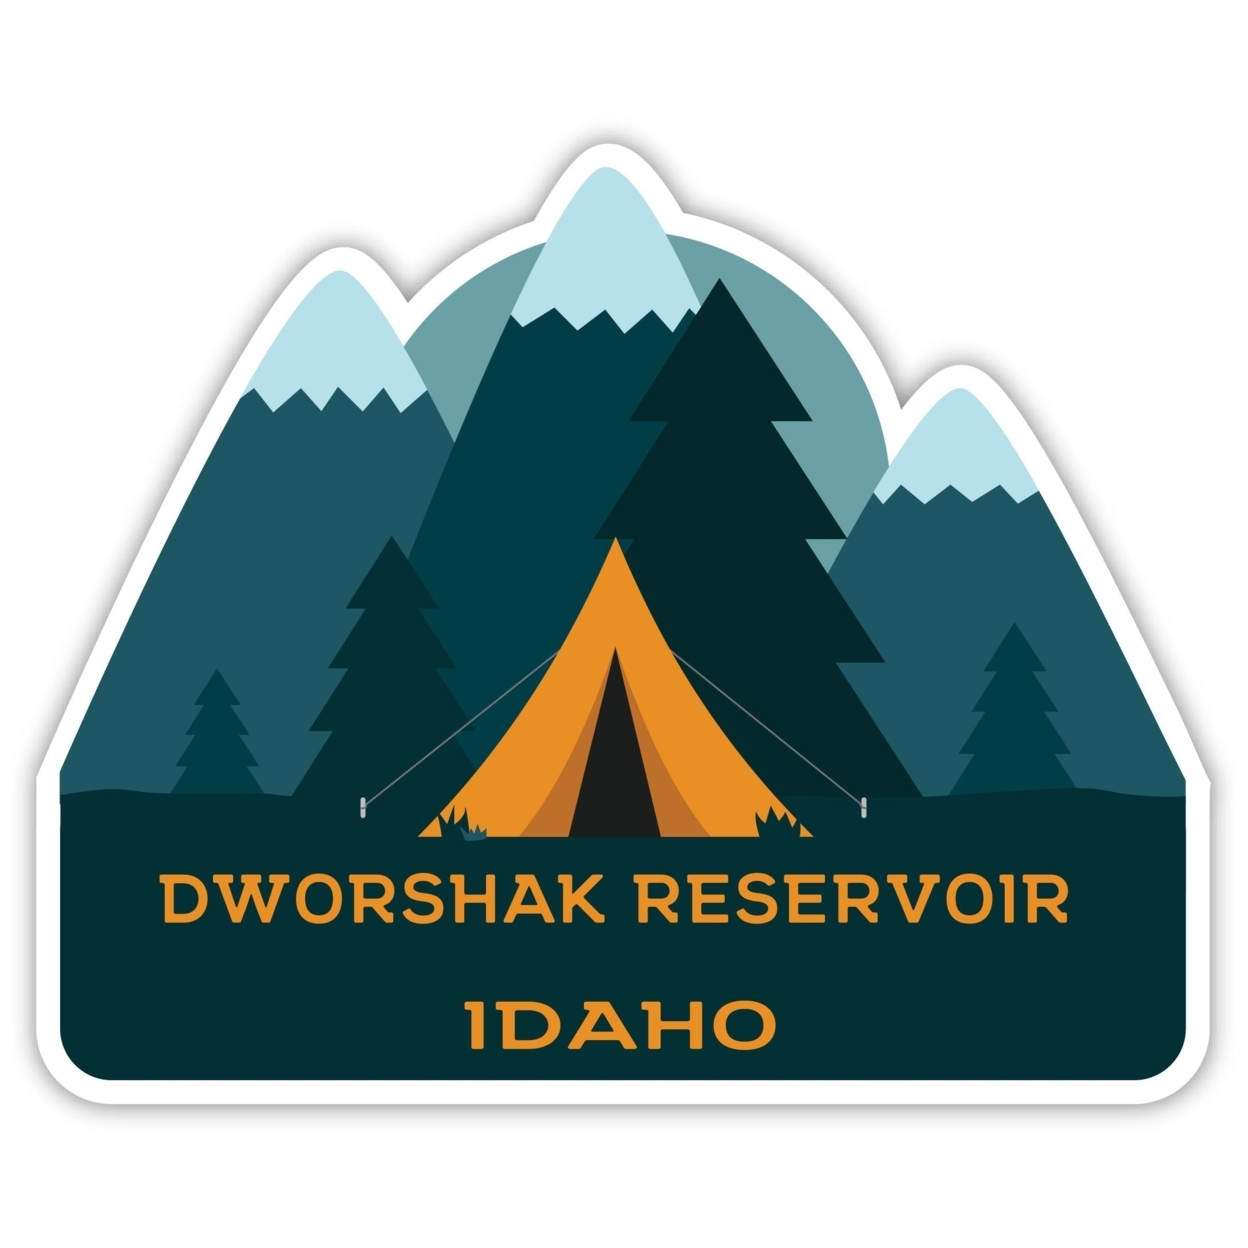 Dworshak Reservoir Idaho Souvenir Decorative Stickers (Choose Theme And Size) - 4-Pack, 4-Inch, Bear